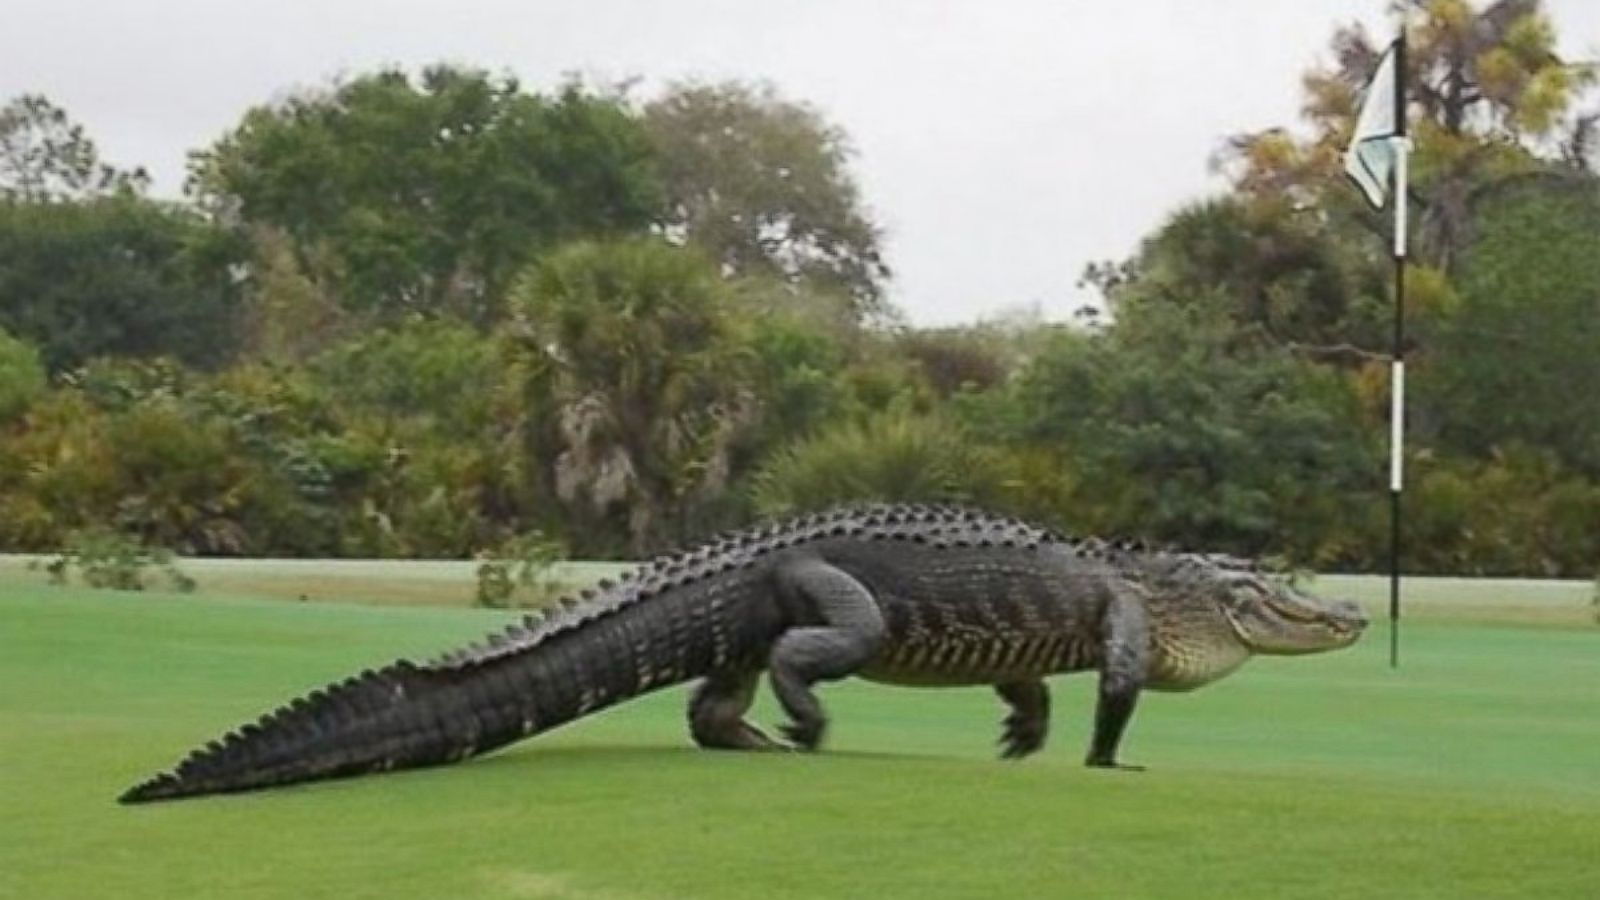 HT_alligator_golf_course_2_jtm_150311_16x9_1600.jpg